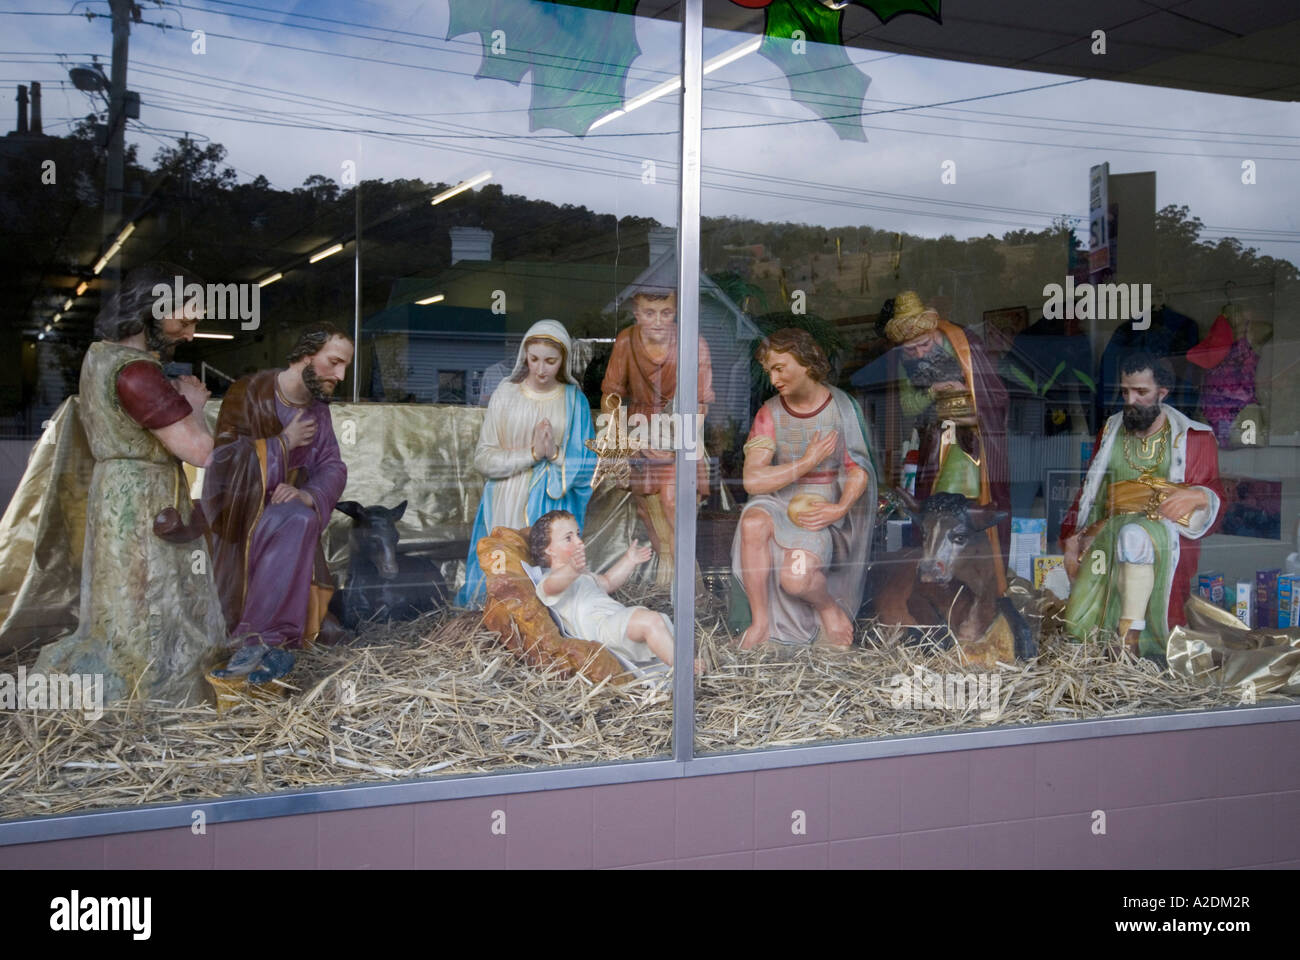 A nativity scene the window of a St Vincent de Paul charity op shop Stock Photo